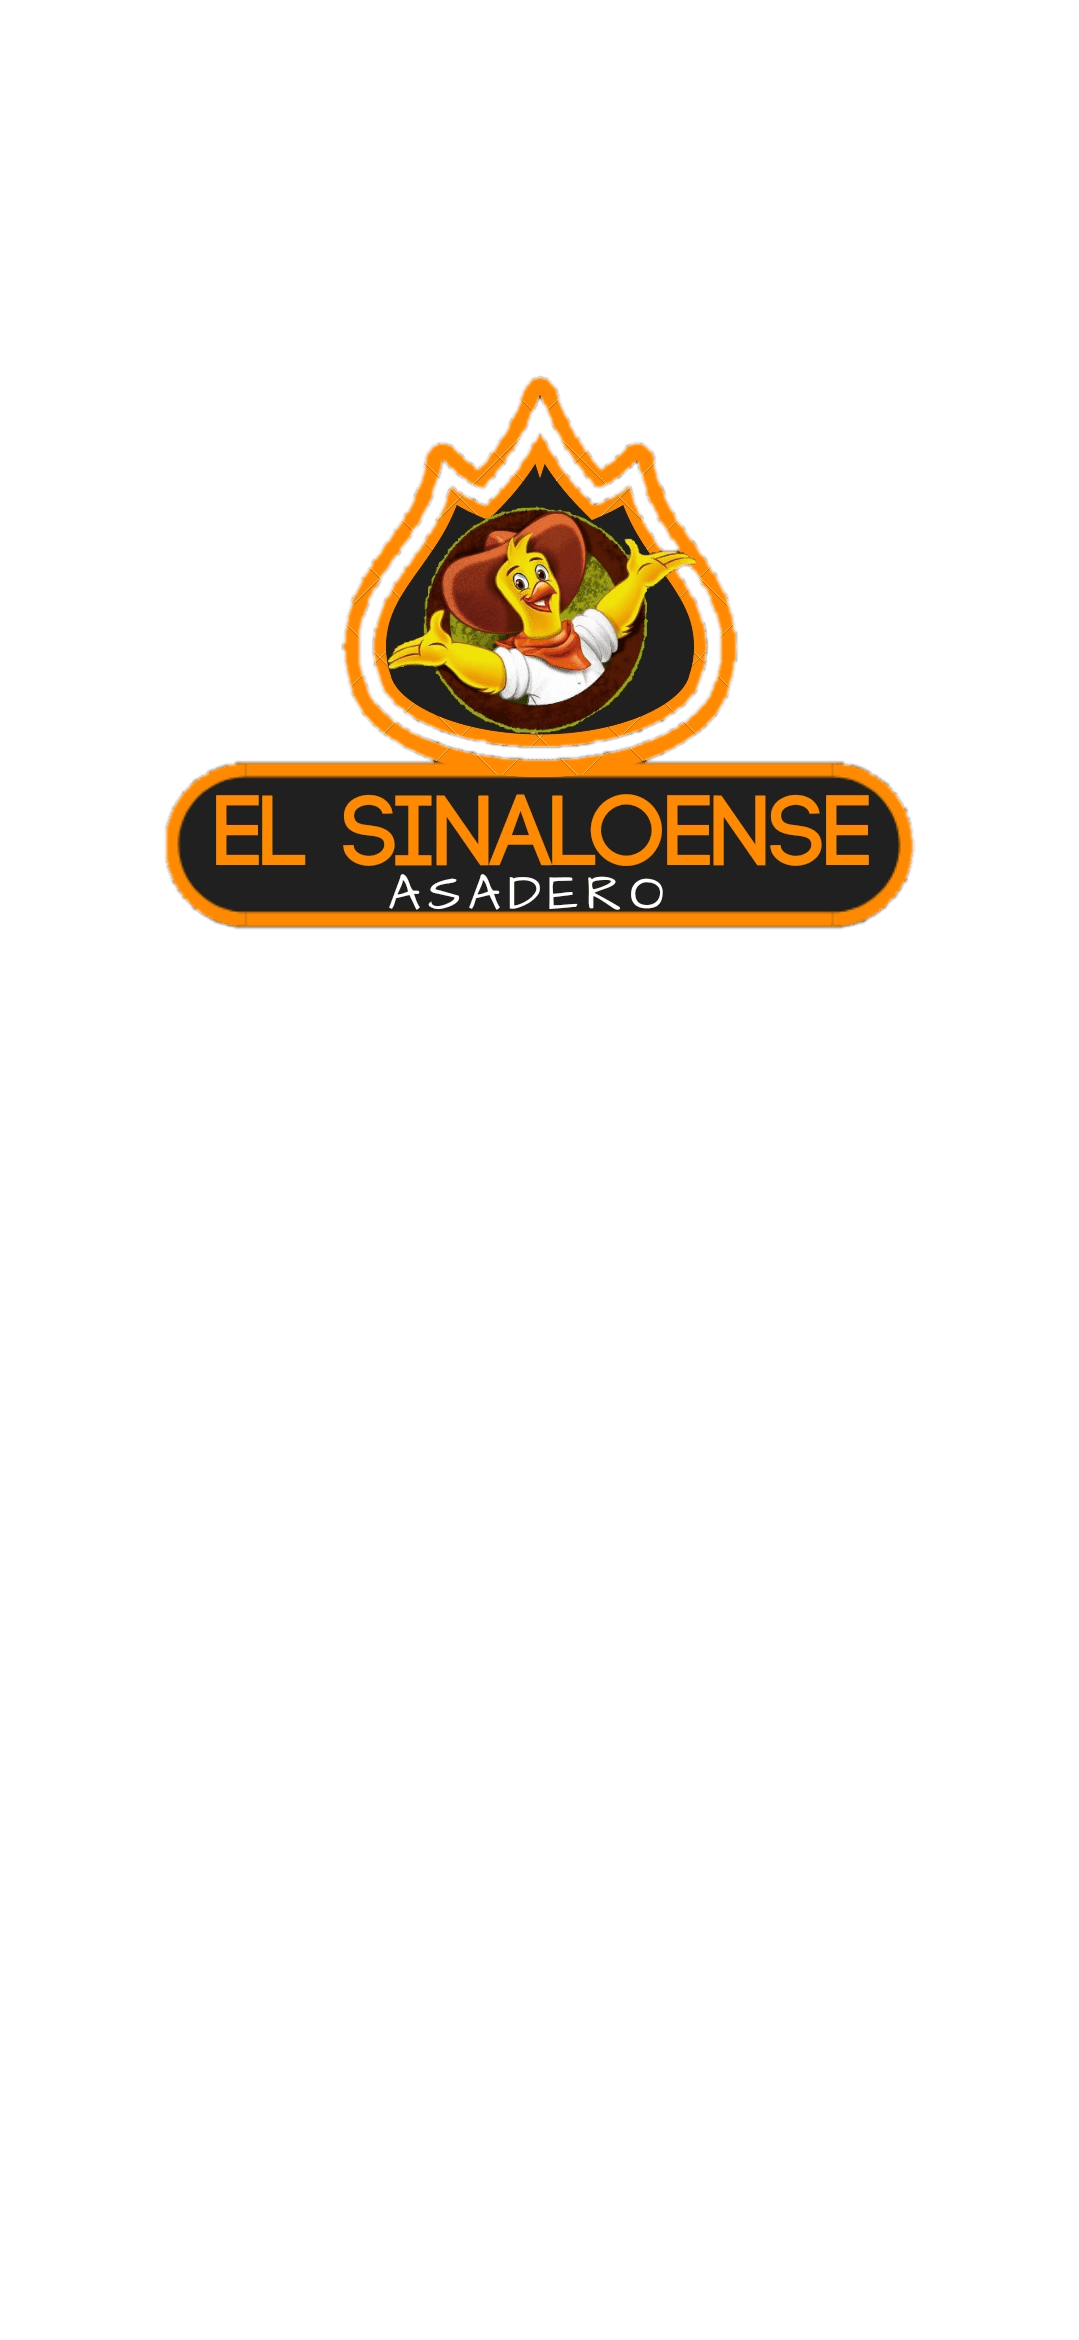 El Sinaloense Asadero